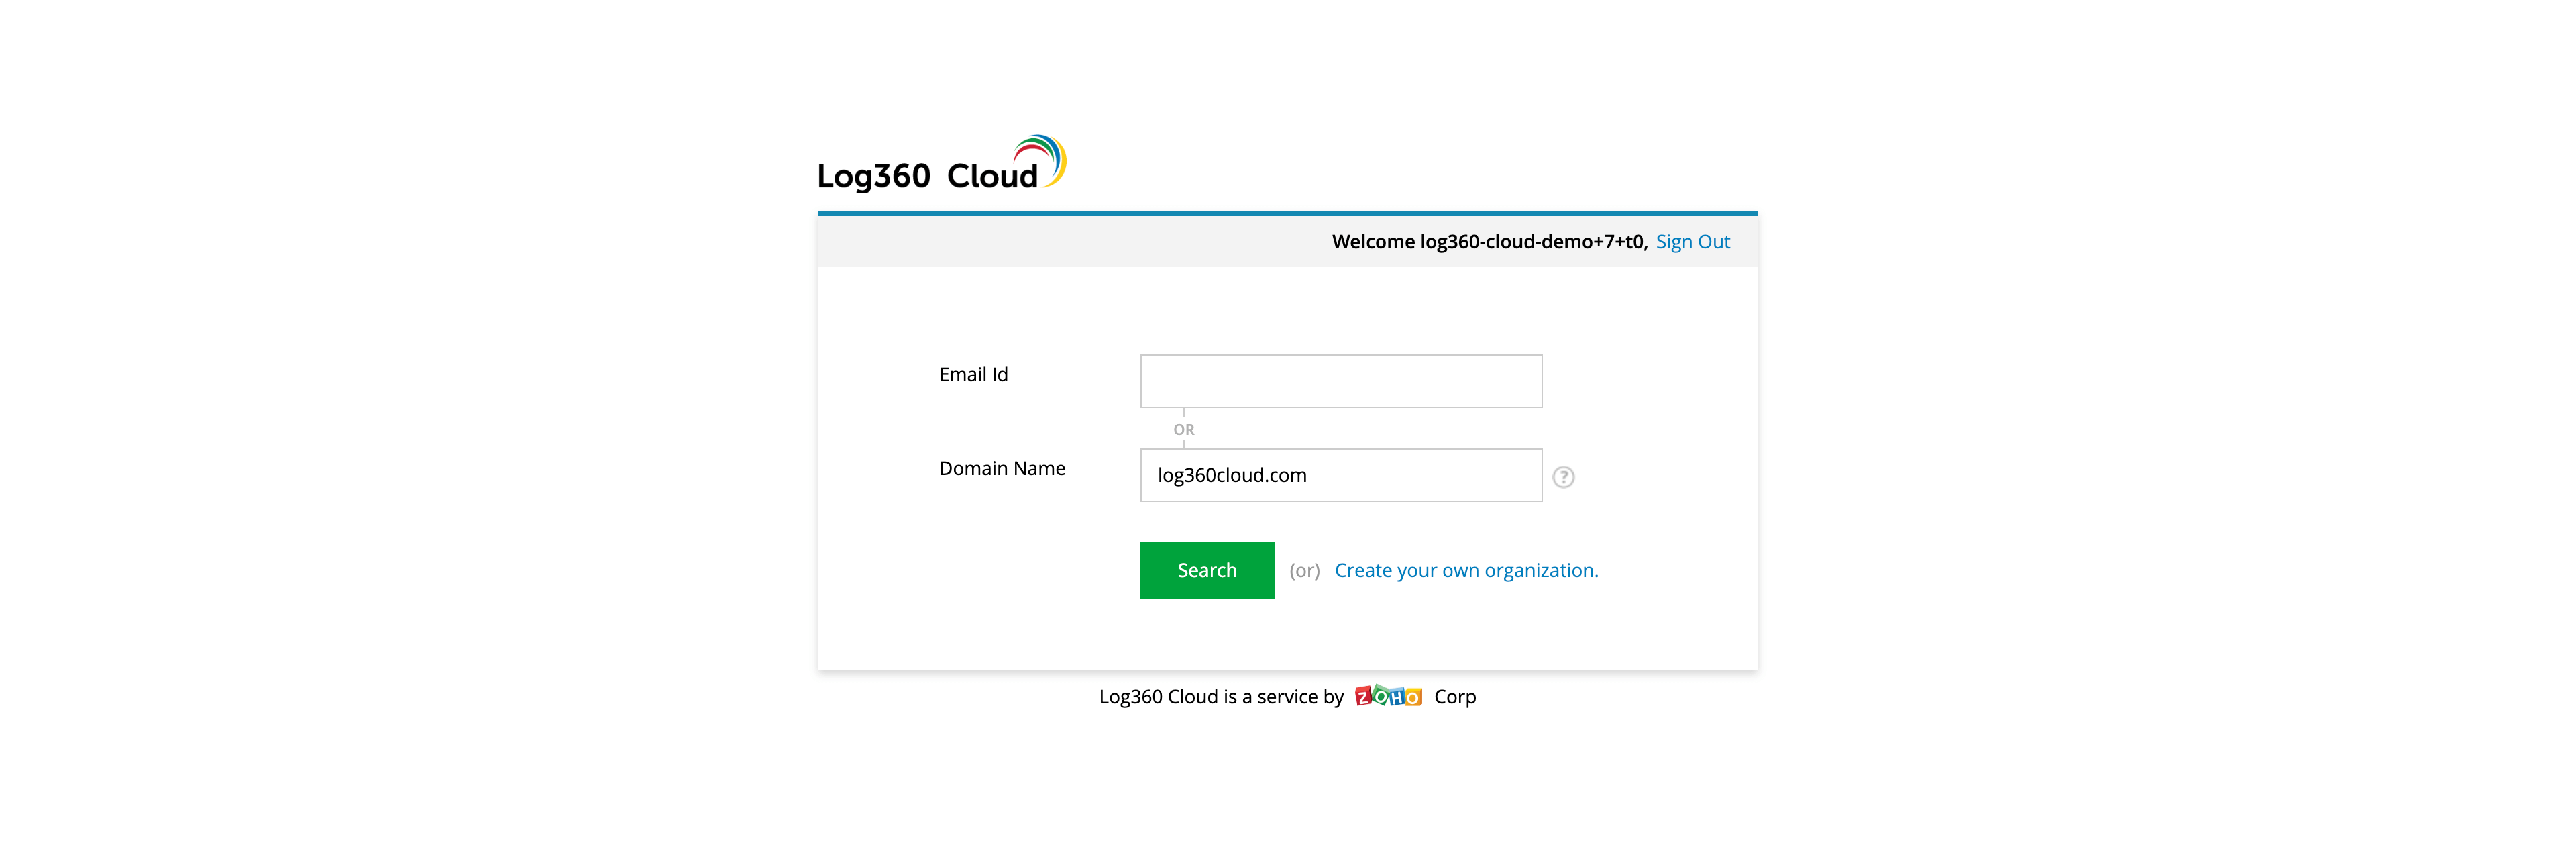 welcome-log360-cloud-demo